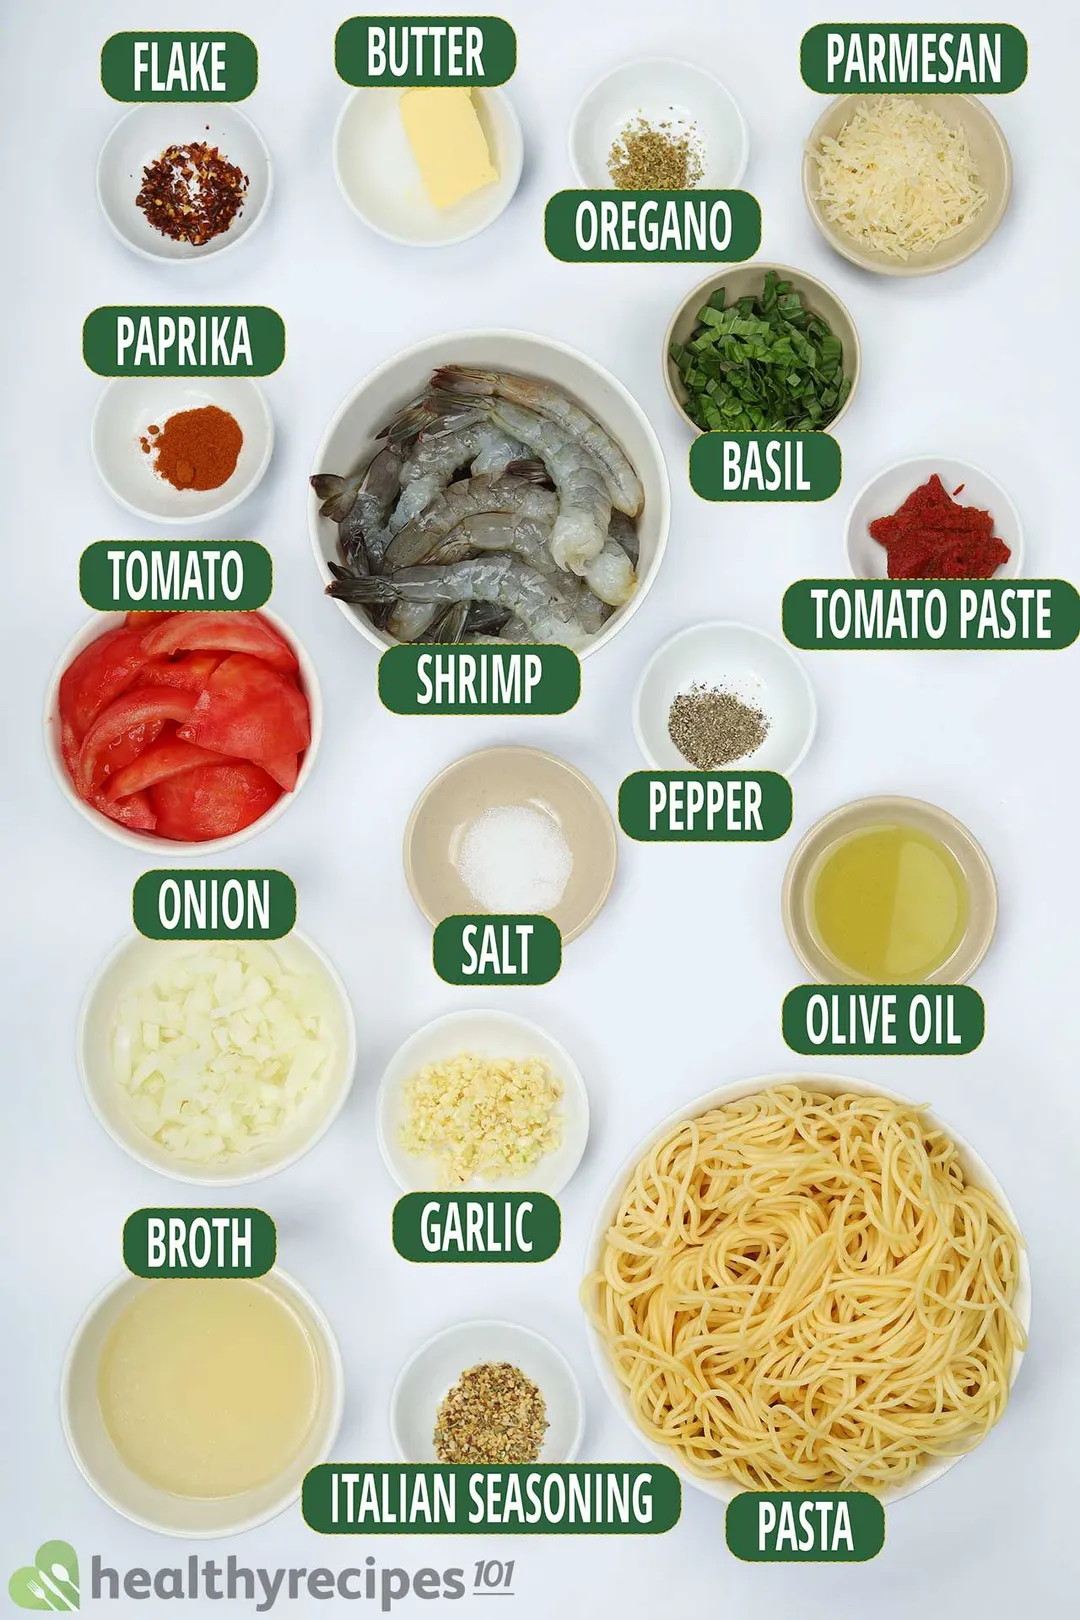 Ingredients for Our Shrimp Marinara